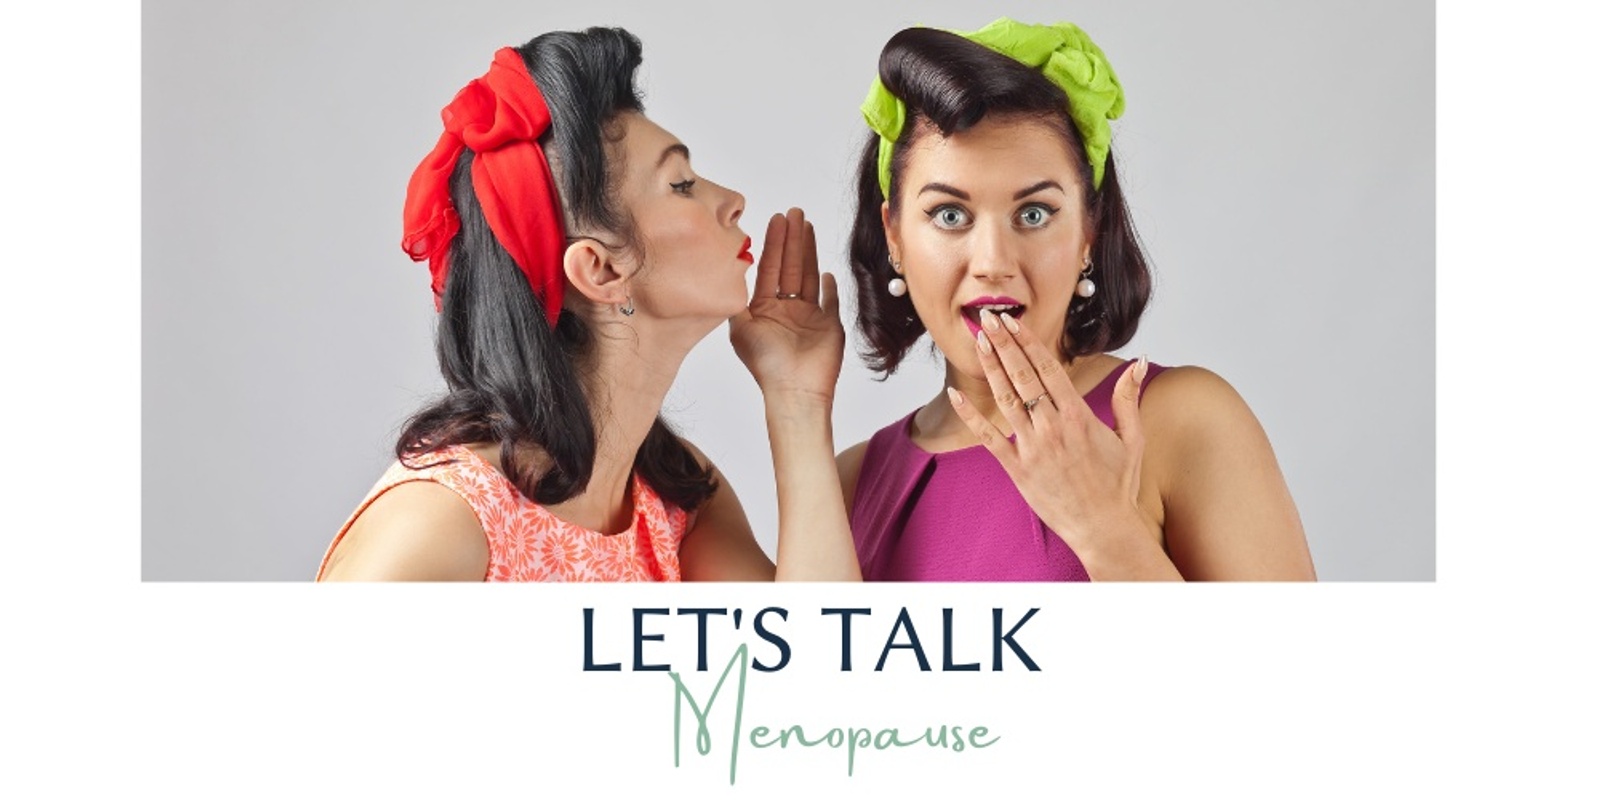 Banner image for Let's talk menopause 